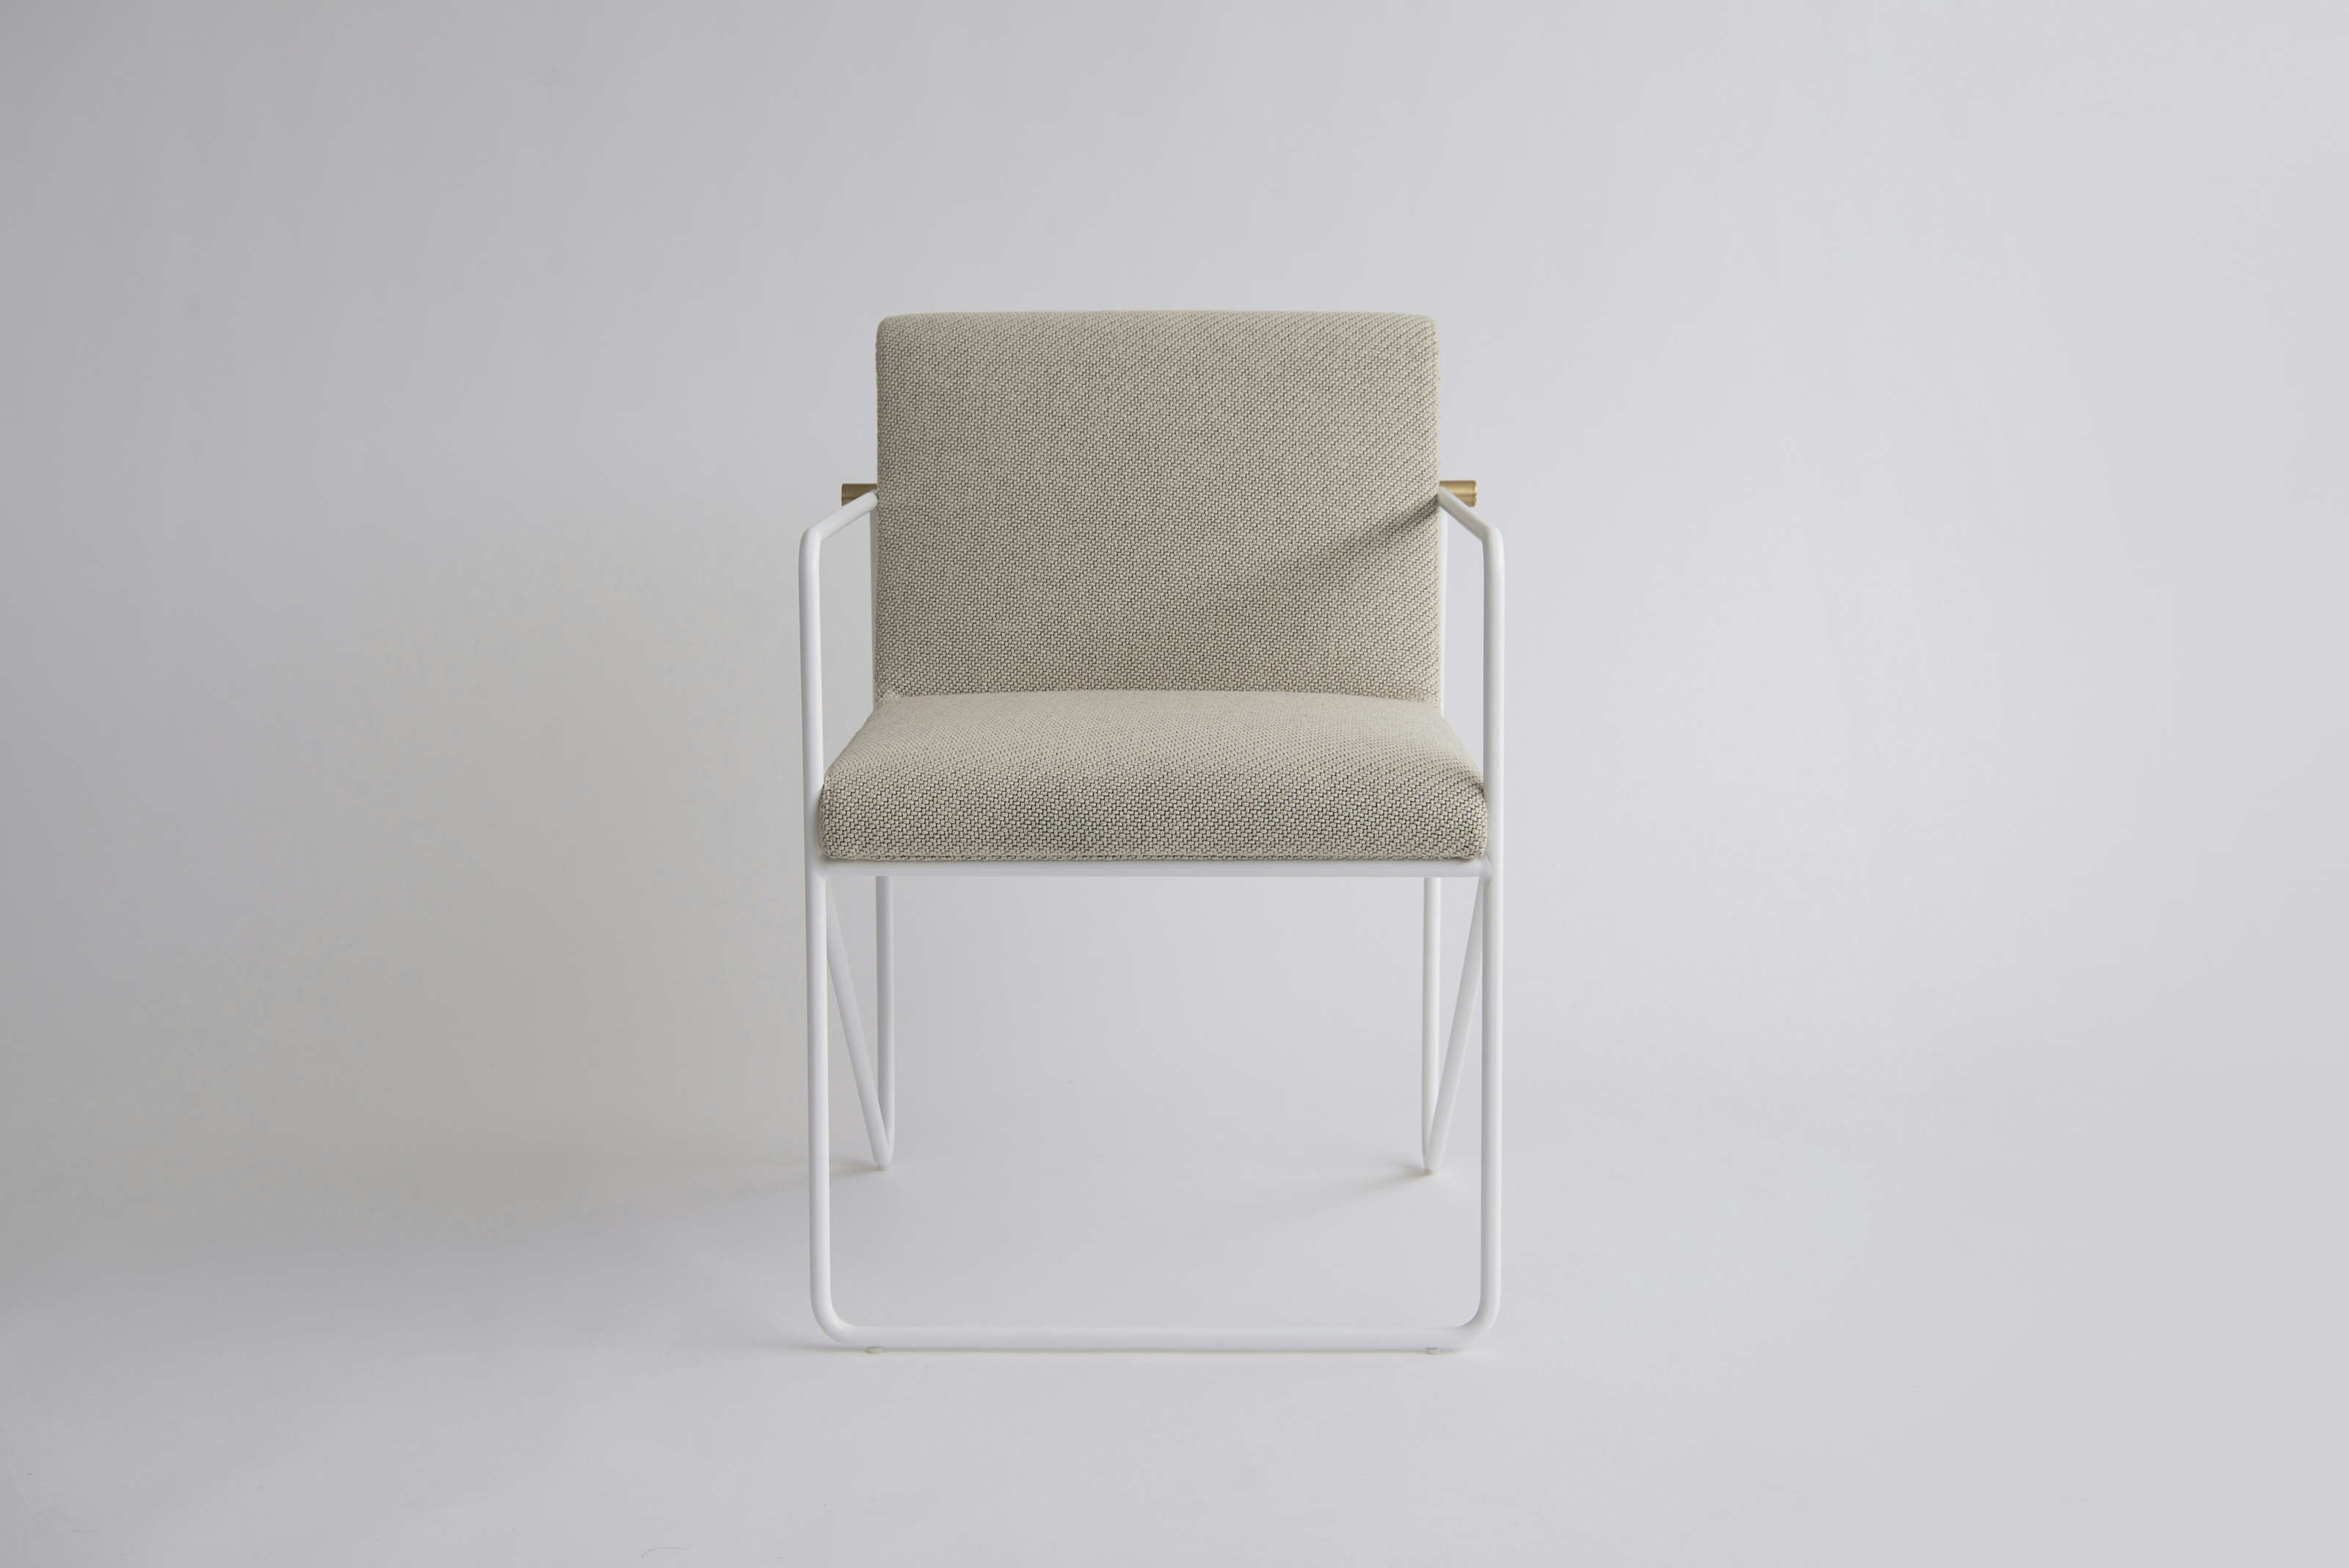 Phase Design Reza Feiz Kickstand Side Chair 1 Web